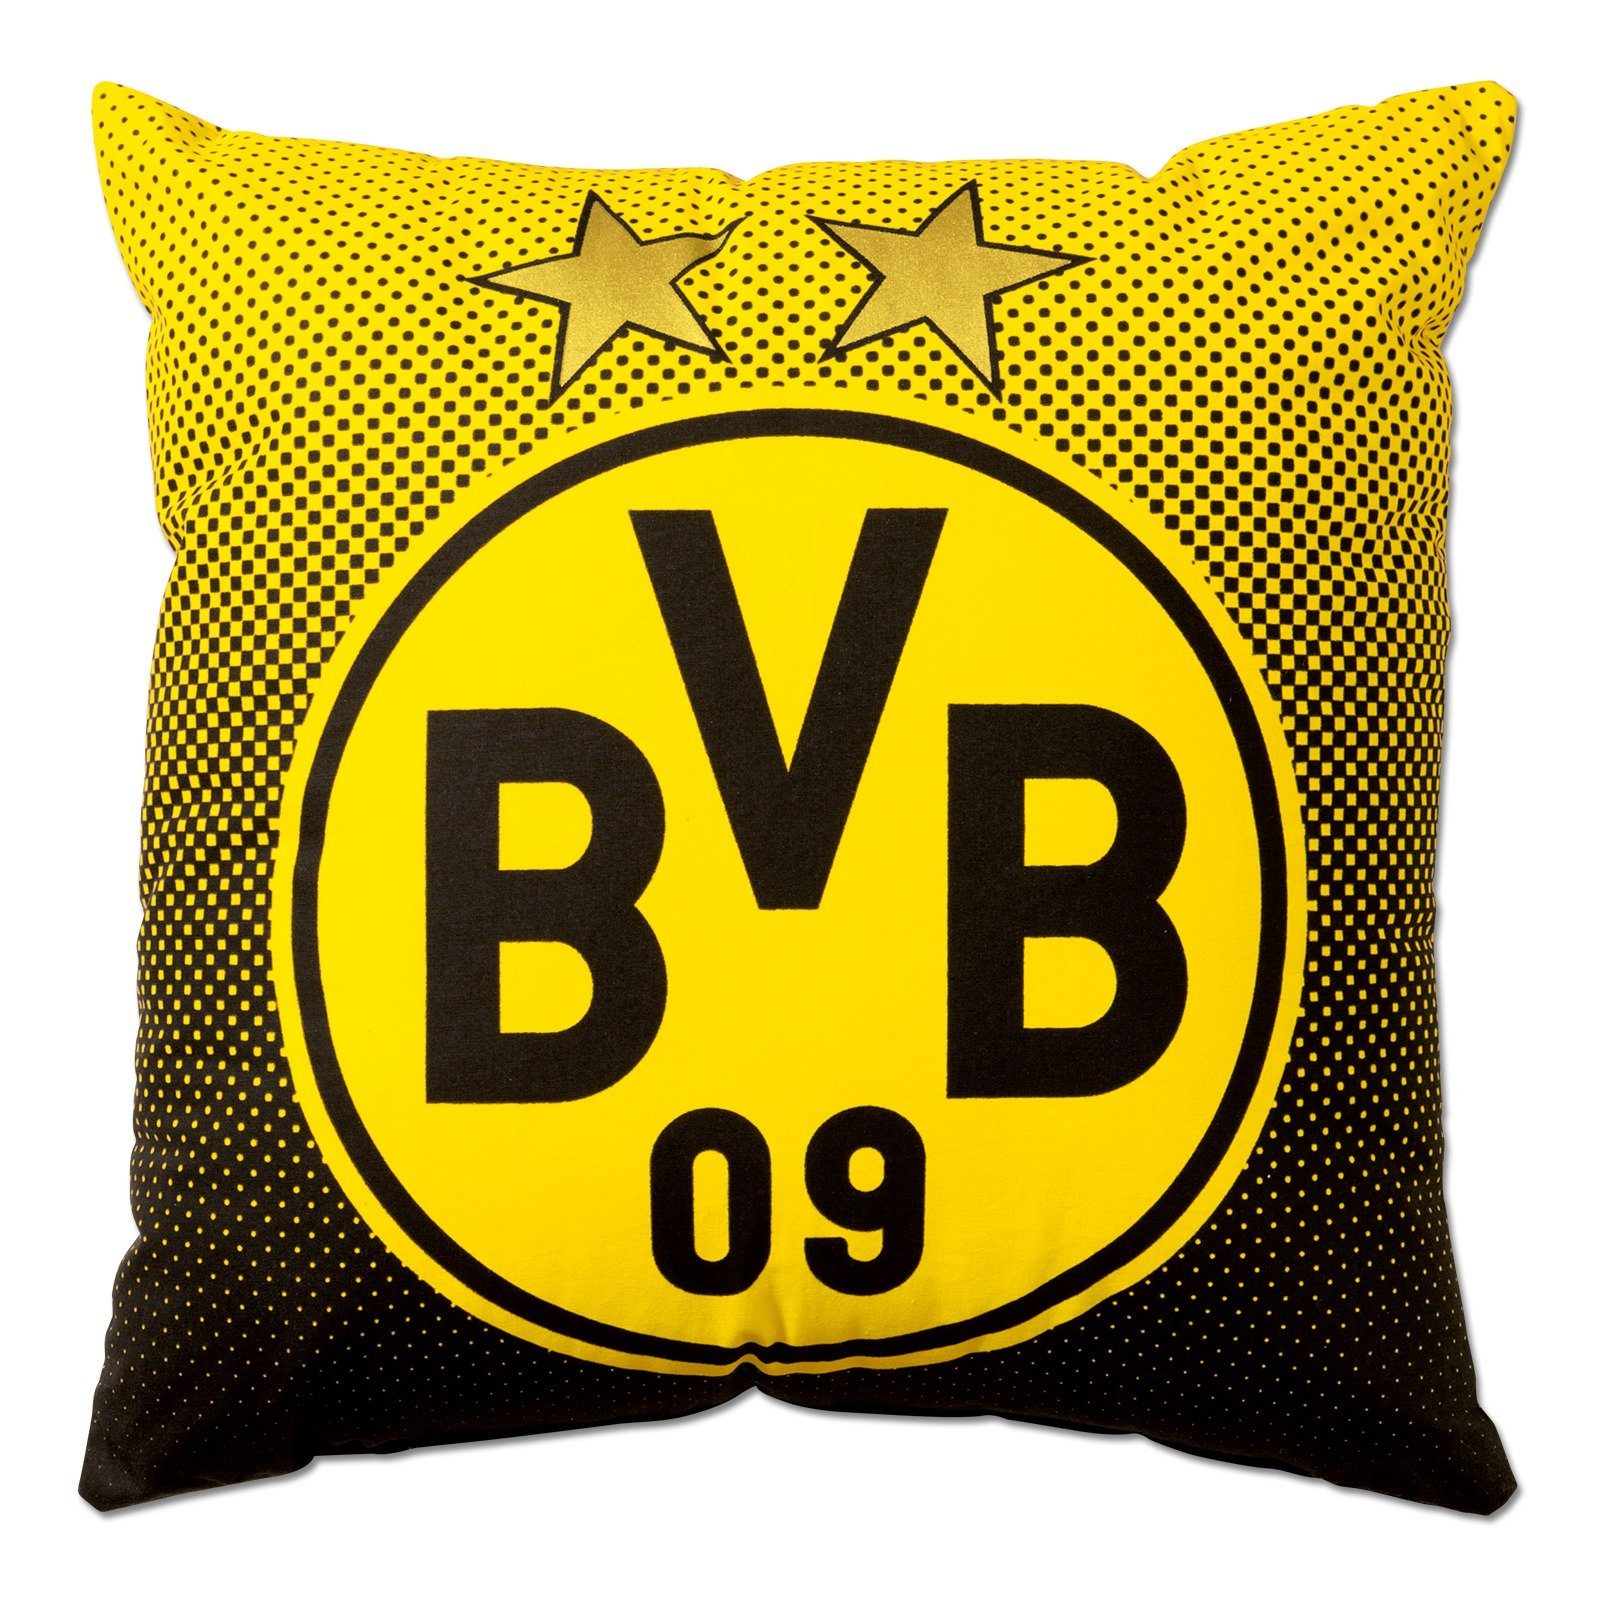 Kopfkissen BVB-Kissen mit Emblem (40x40cm), BVB, Bezug: 100% Baumwolle, Rückenschläfer